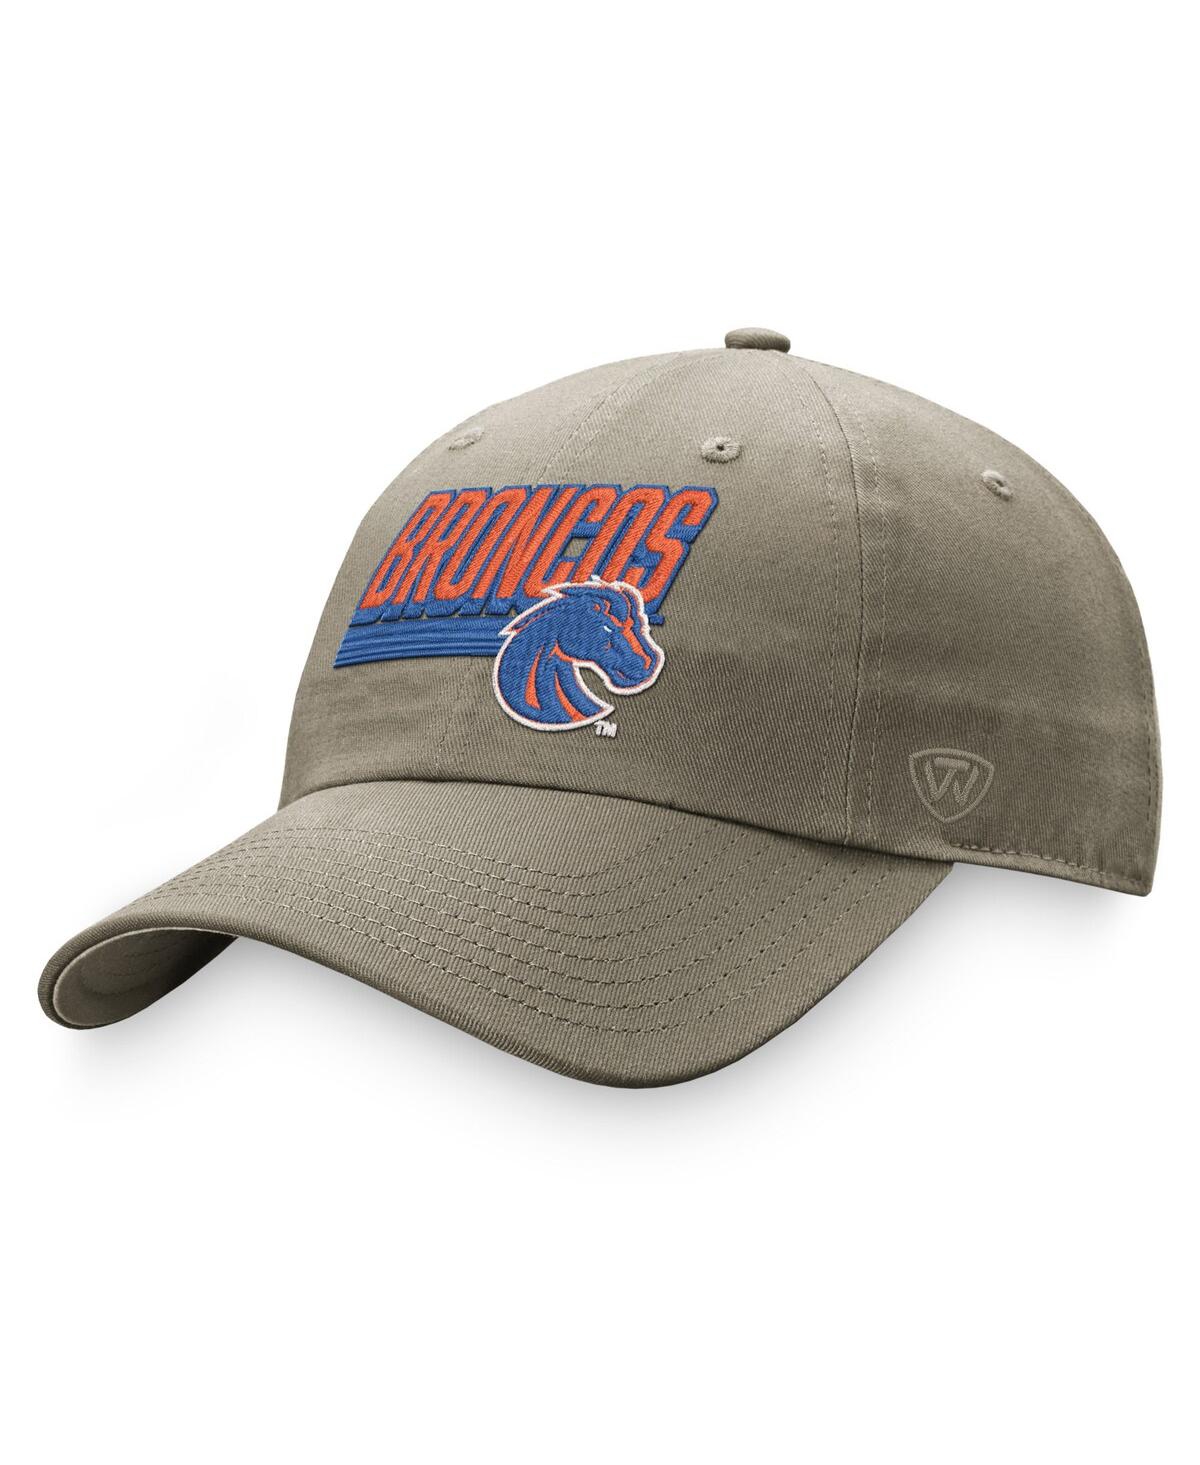 Shop Top Of The World Men's  Khaki Boise State Broncos Slice Adjustable Hat